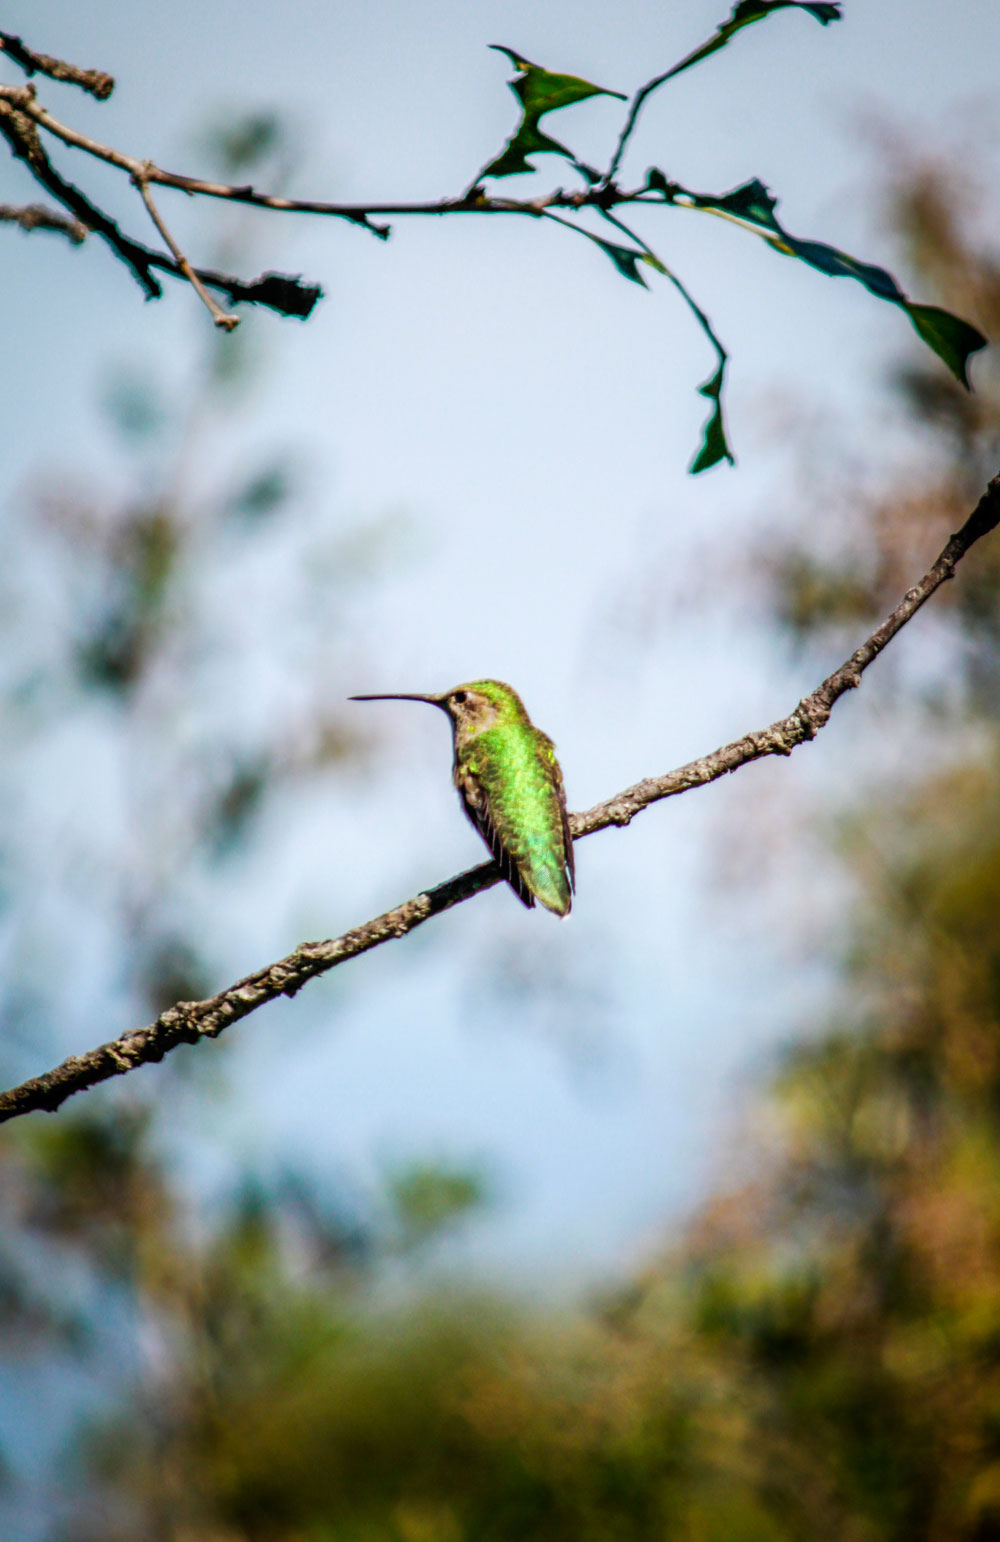 Green Violetear humming bird. Getting close to perfection. (Ezra Rodriguez/Borderzine.com)